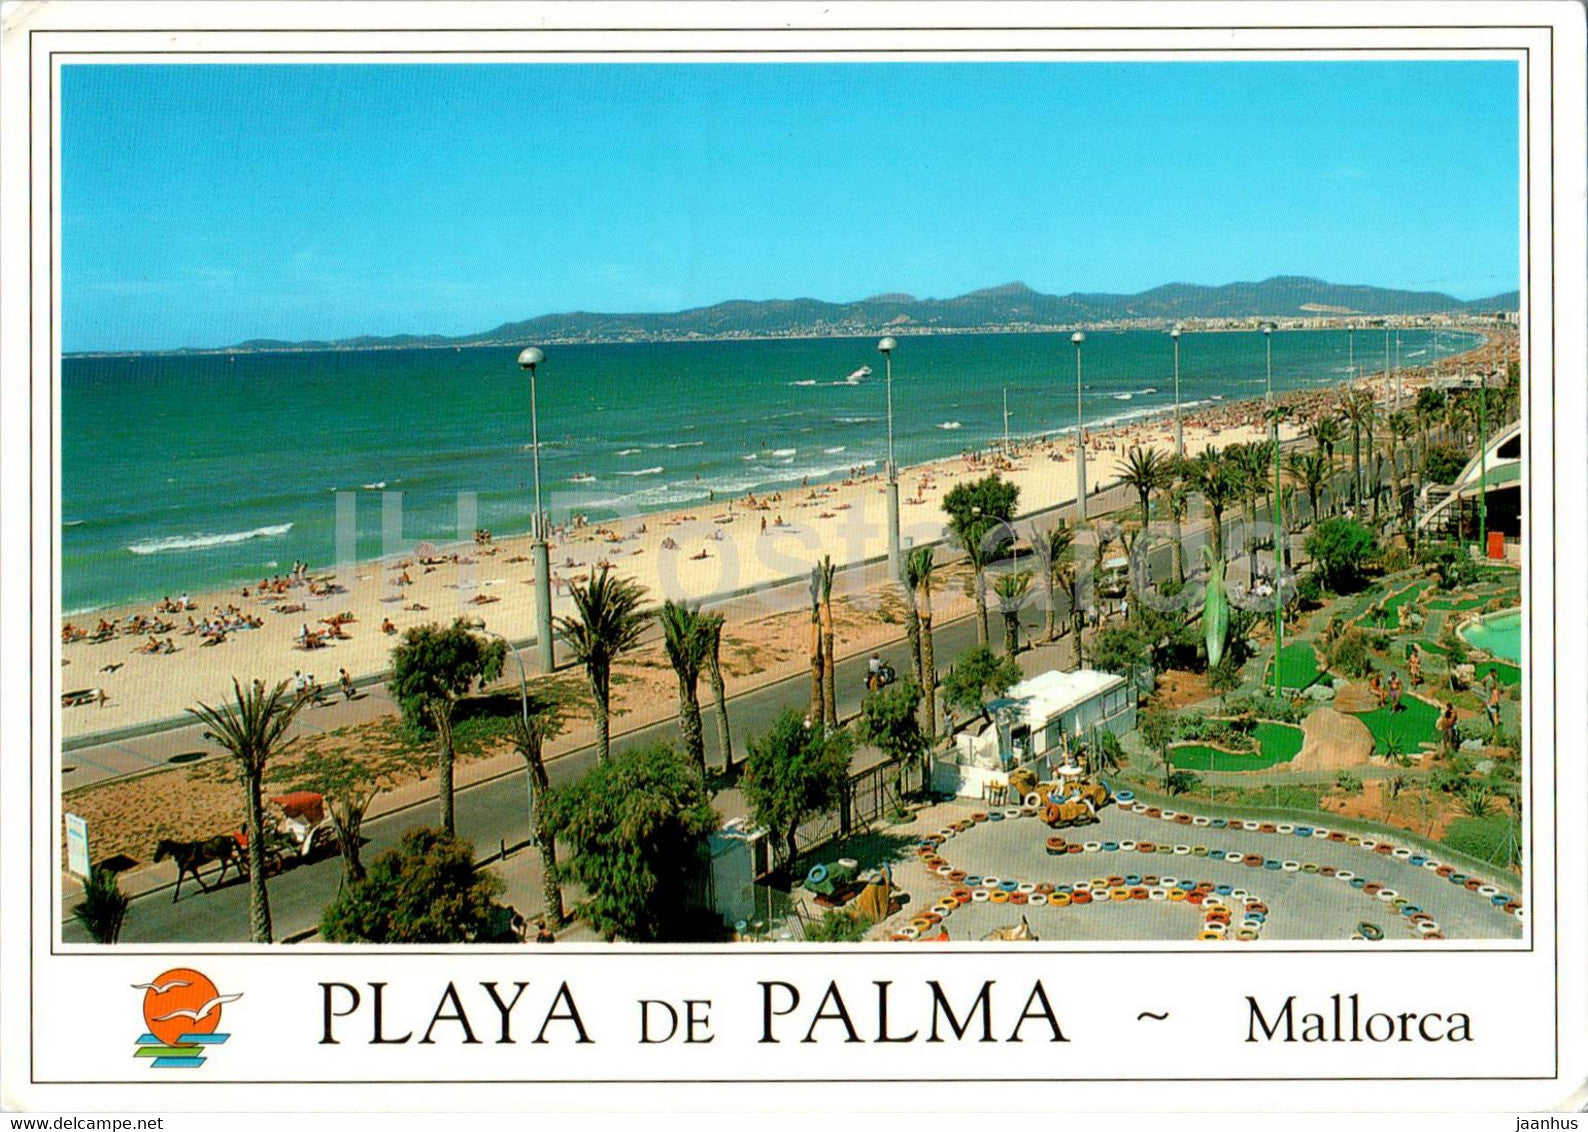 Playa de Palma - Mallorca - beach - 127 - Spain - used - JH Postcards